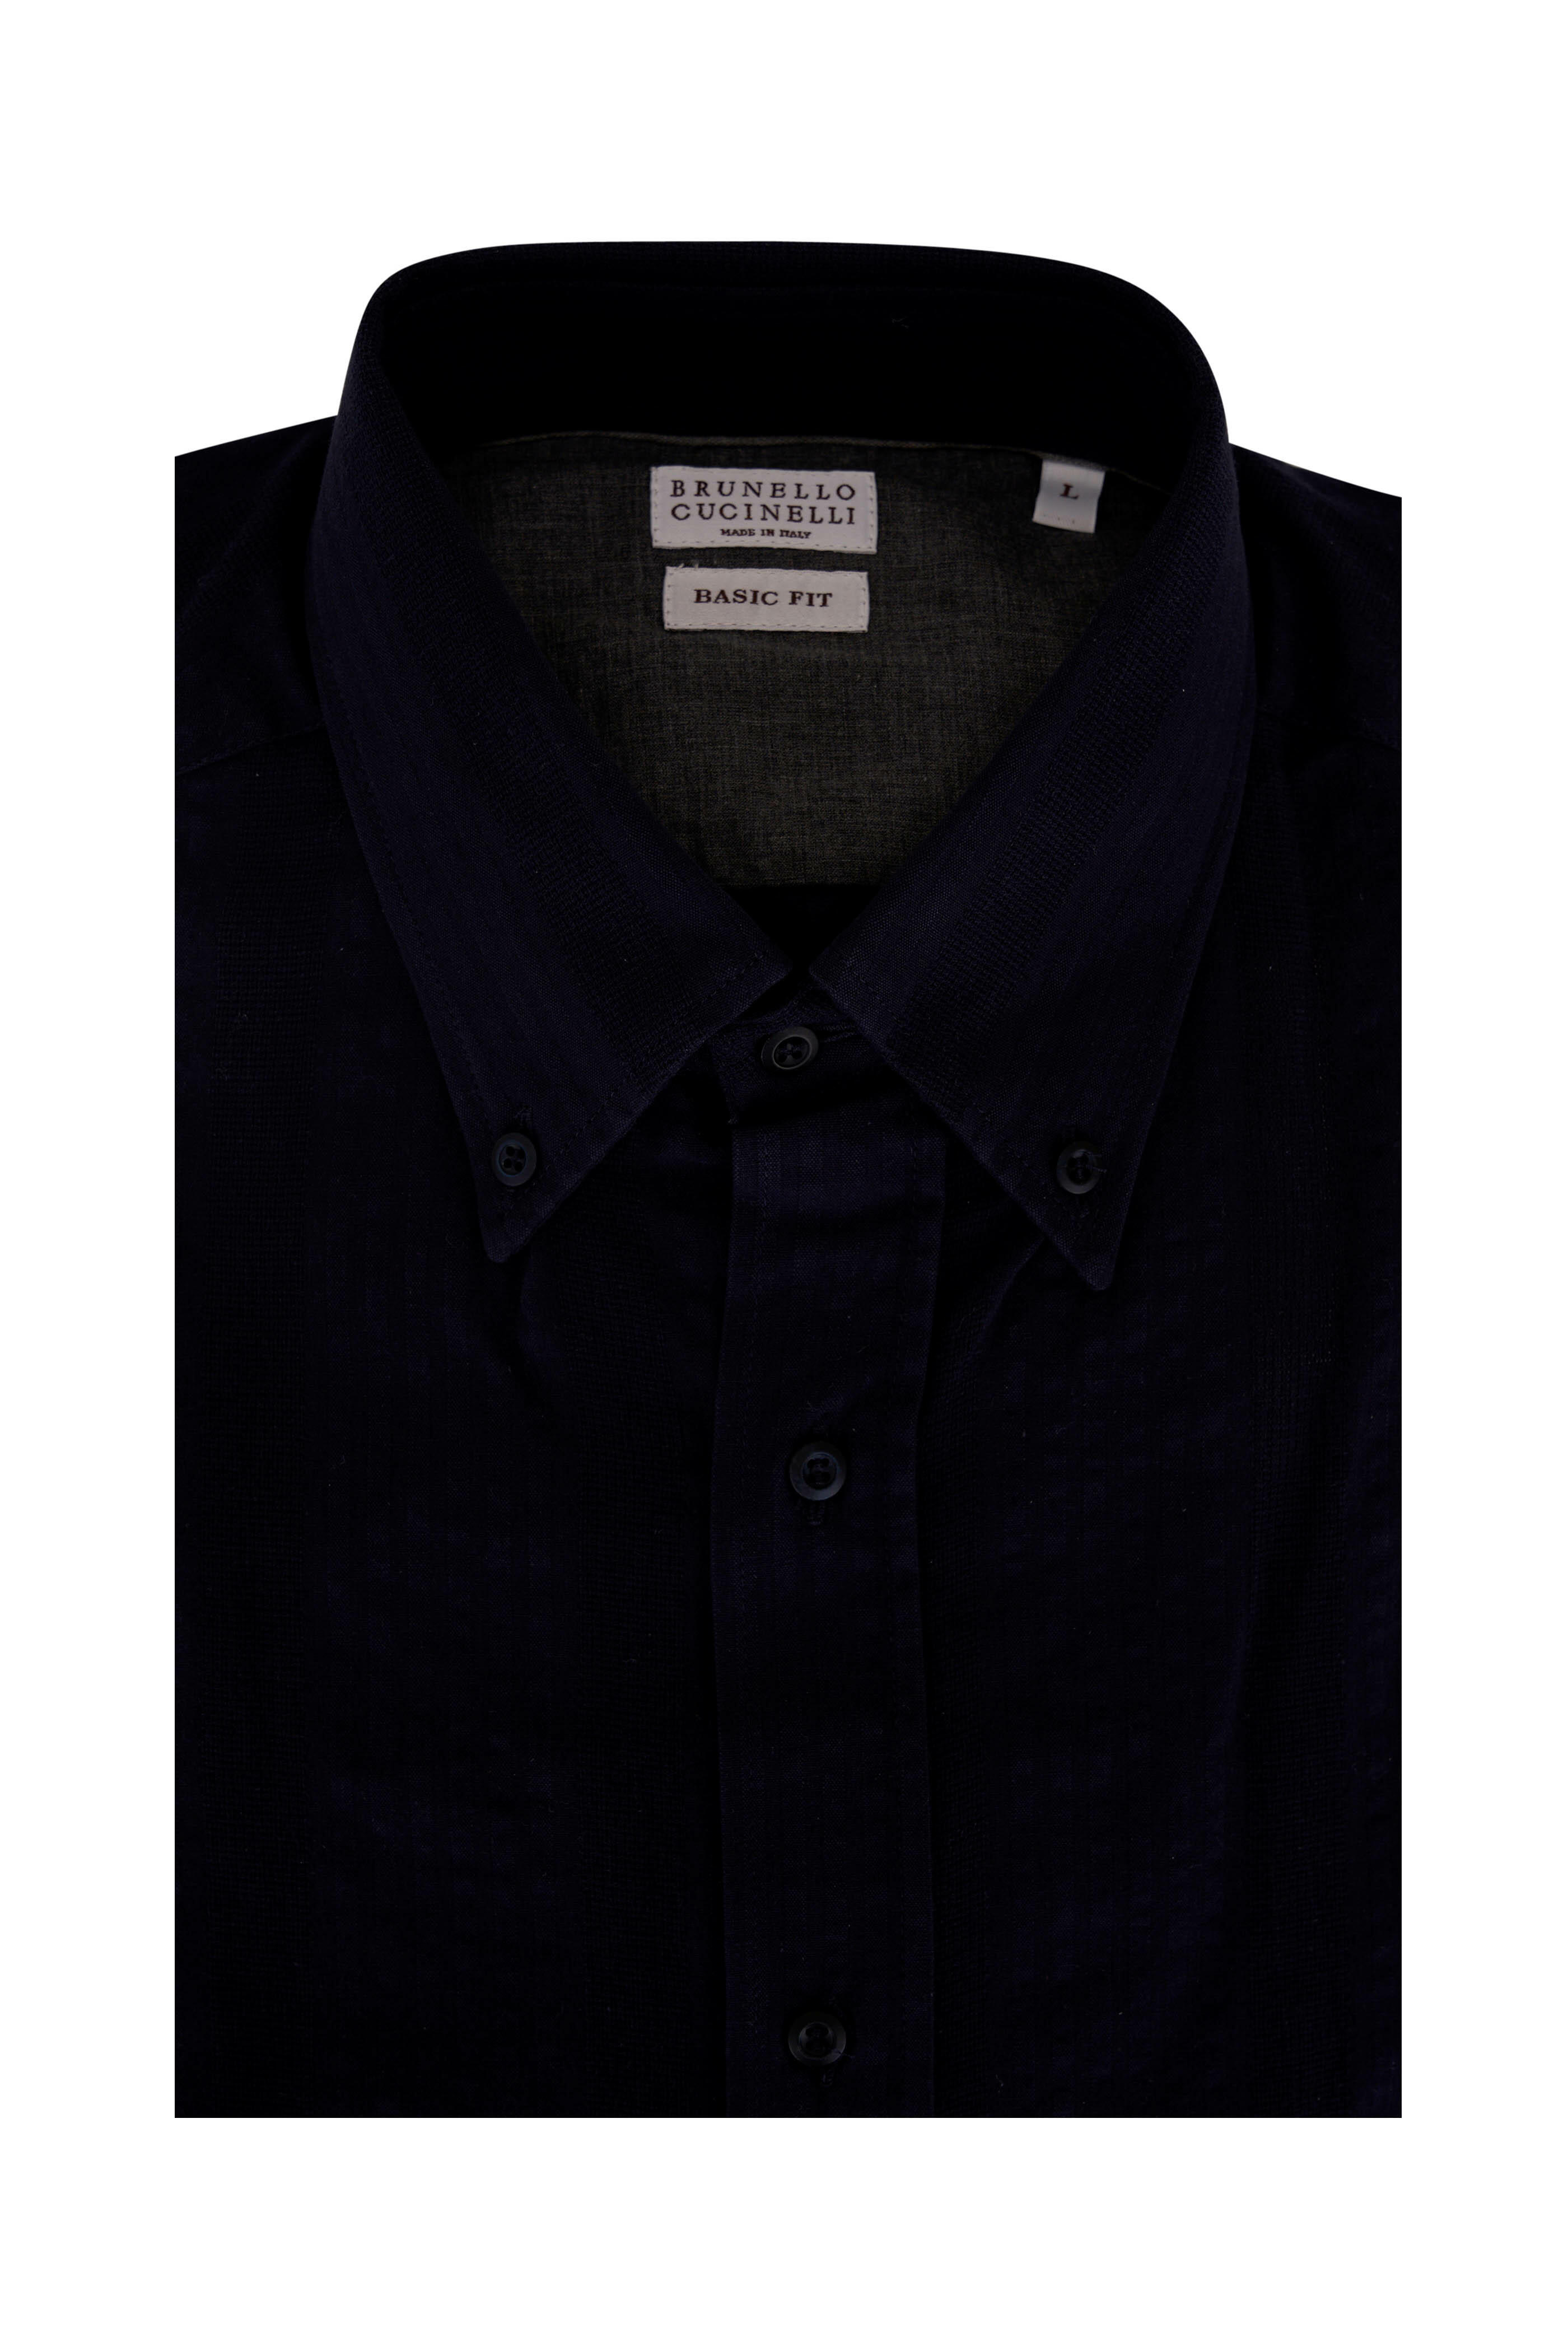 Brunello Cucinelli - Tonal Navy Seersucker Cotton Sport Shirt